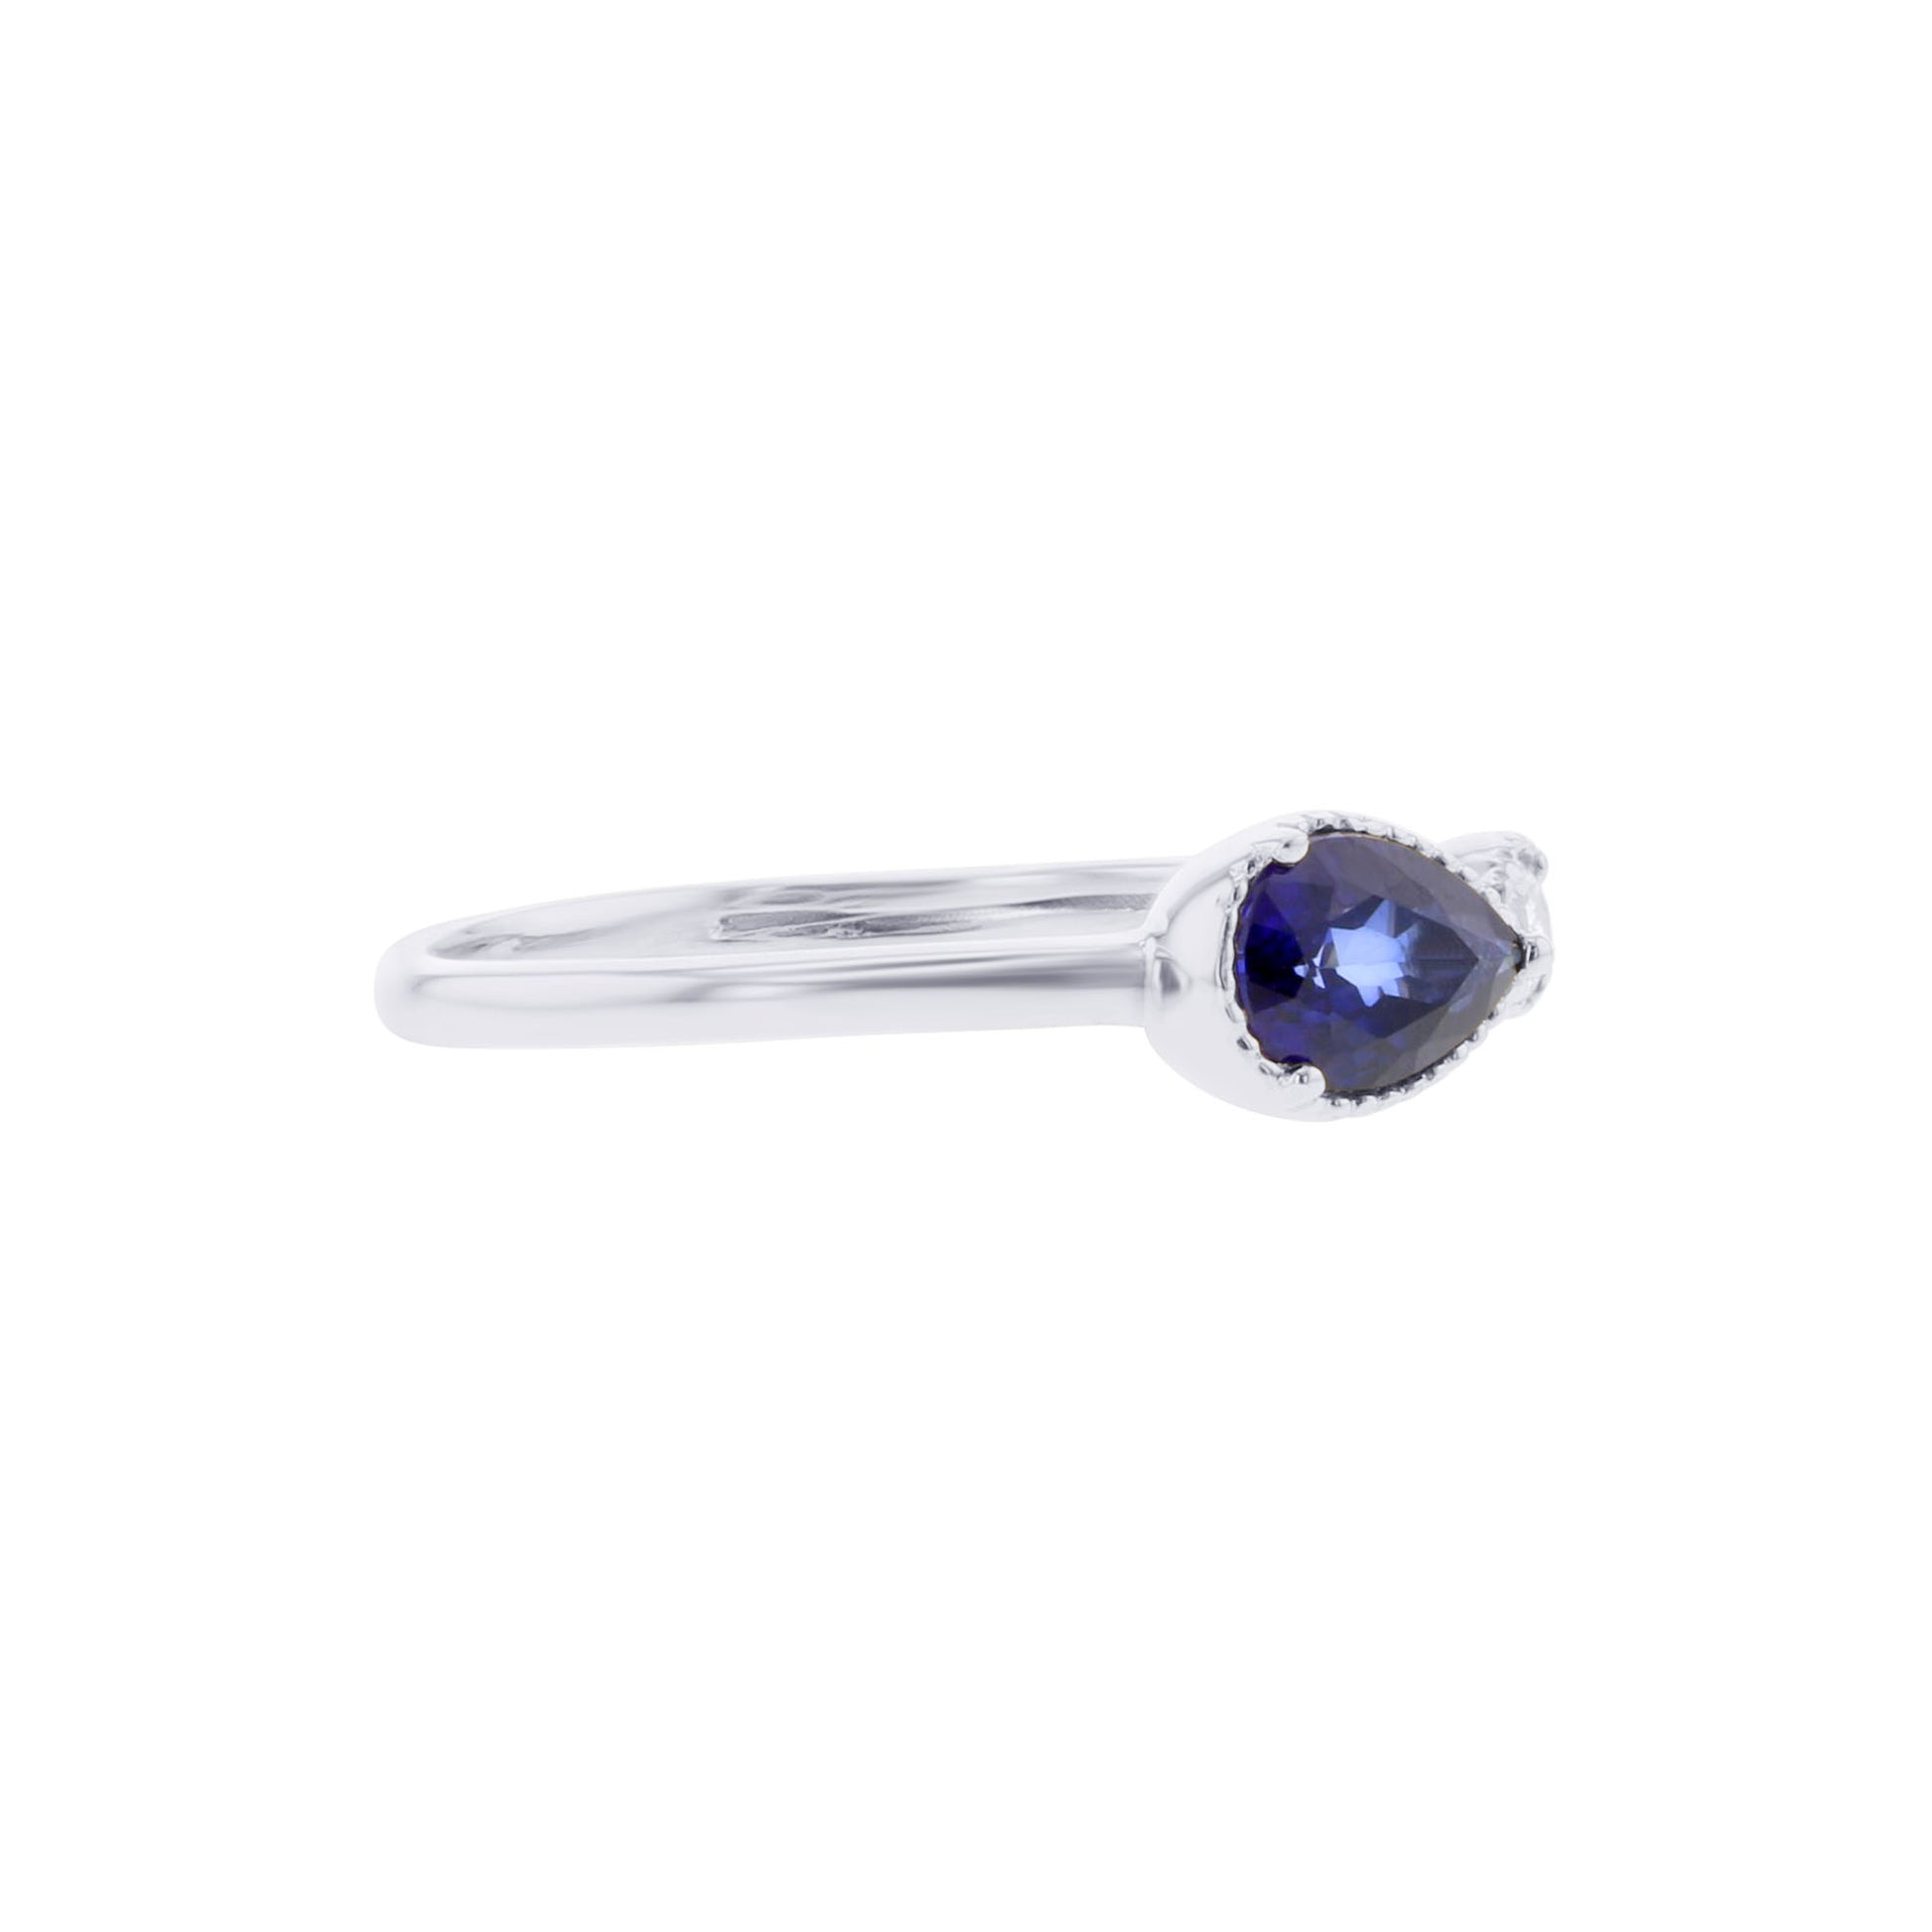 Farah Sapphire and Diamond Ring